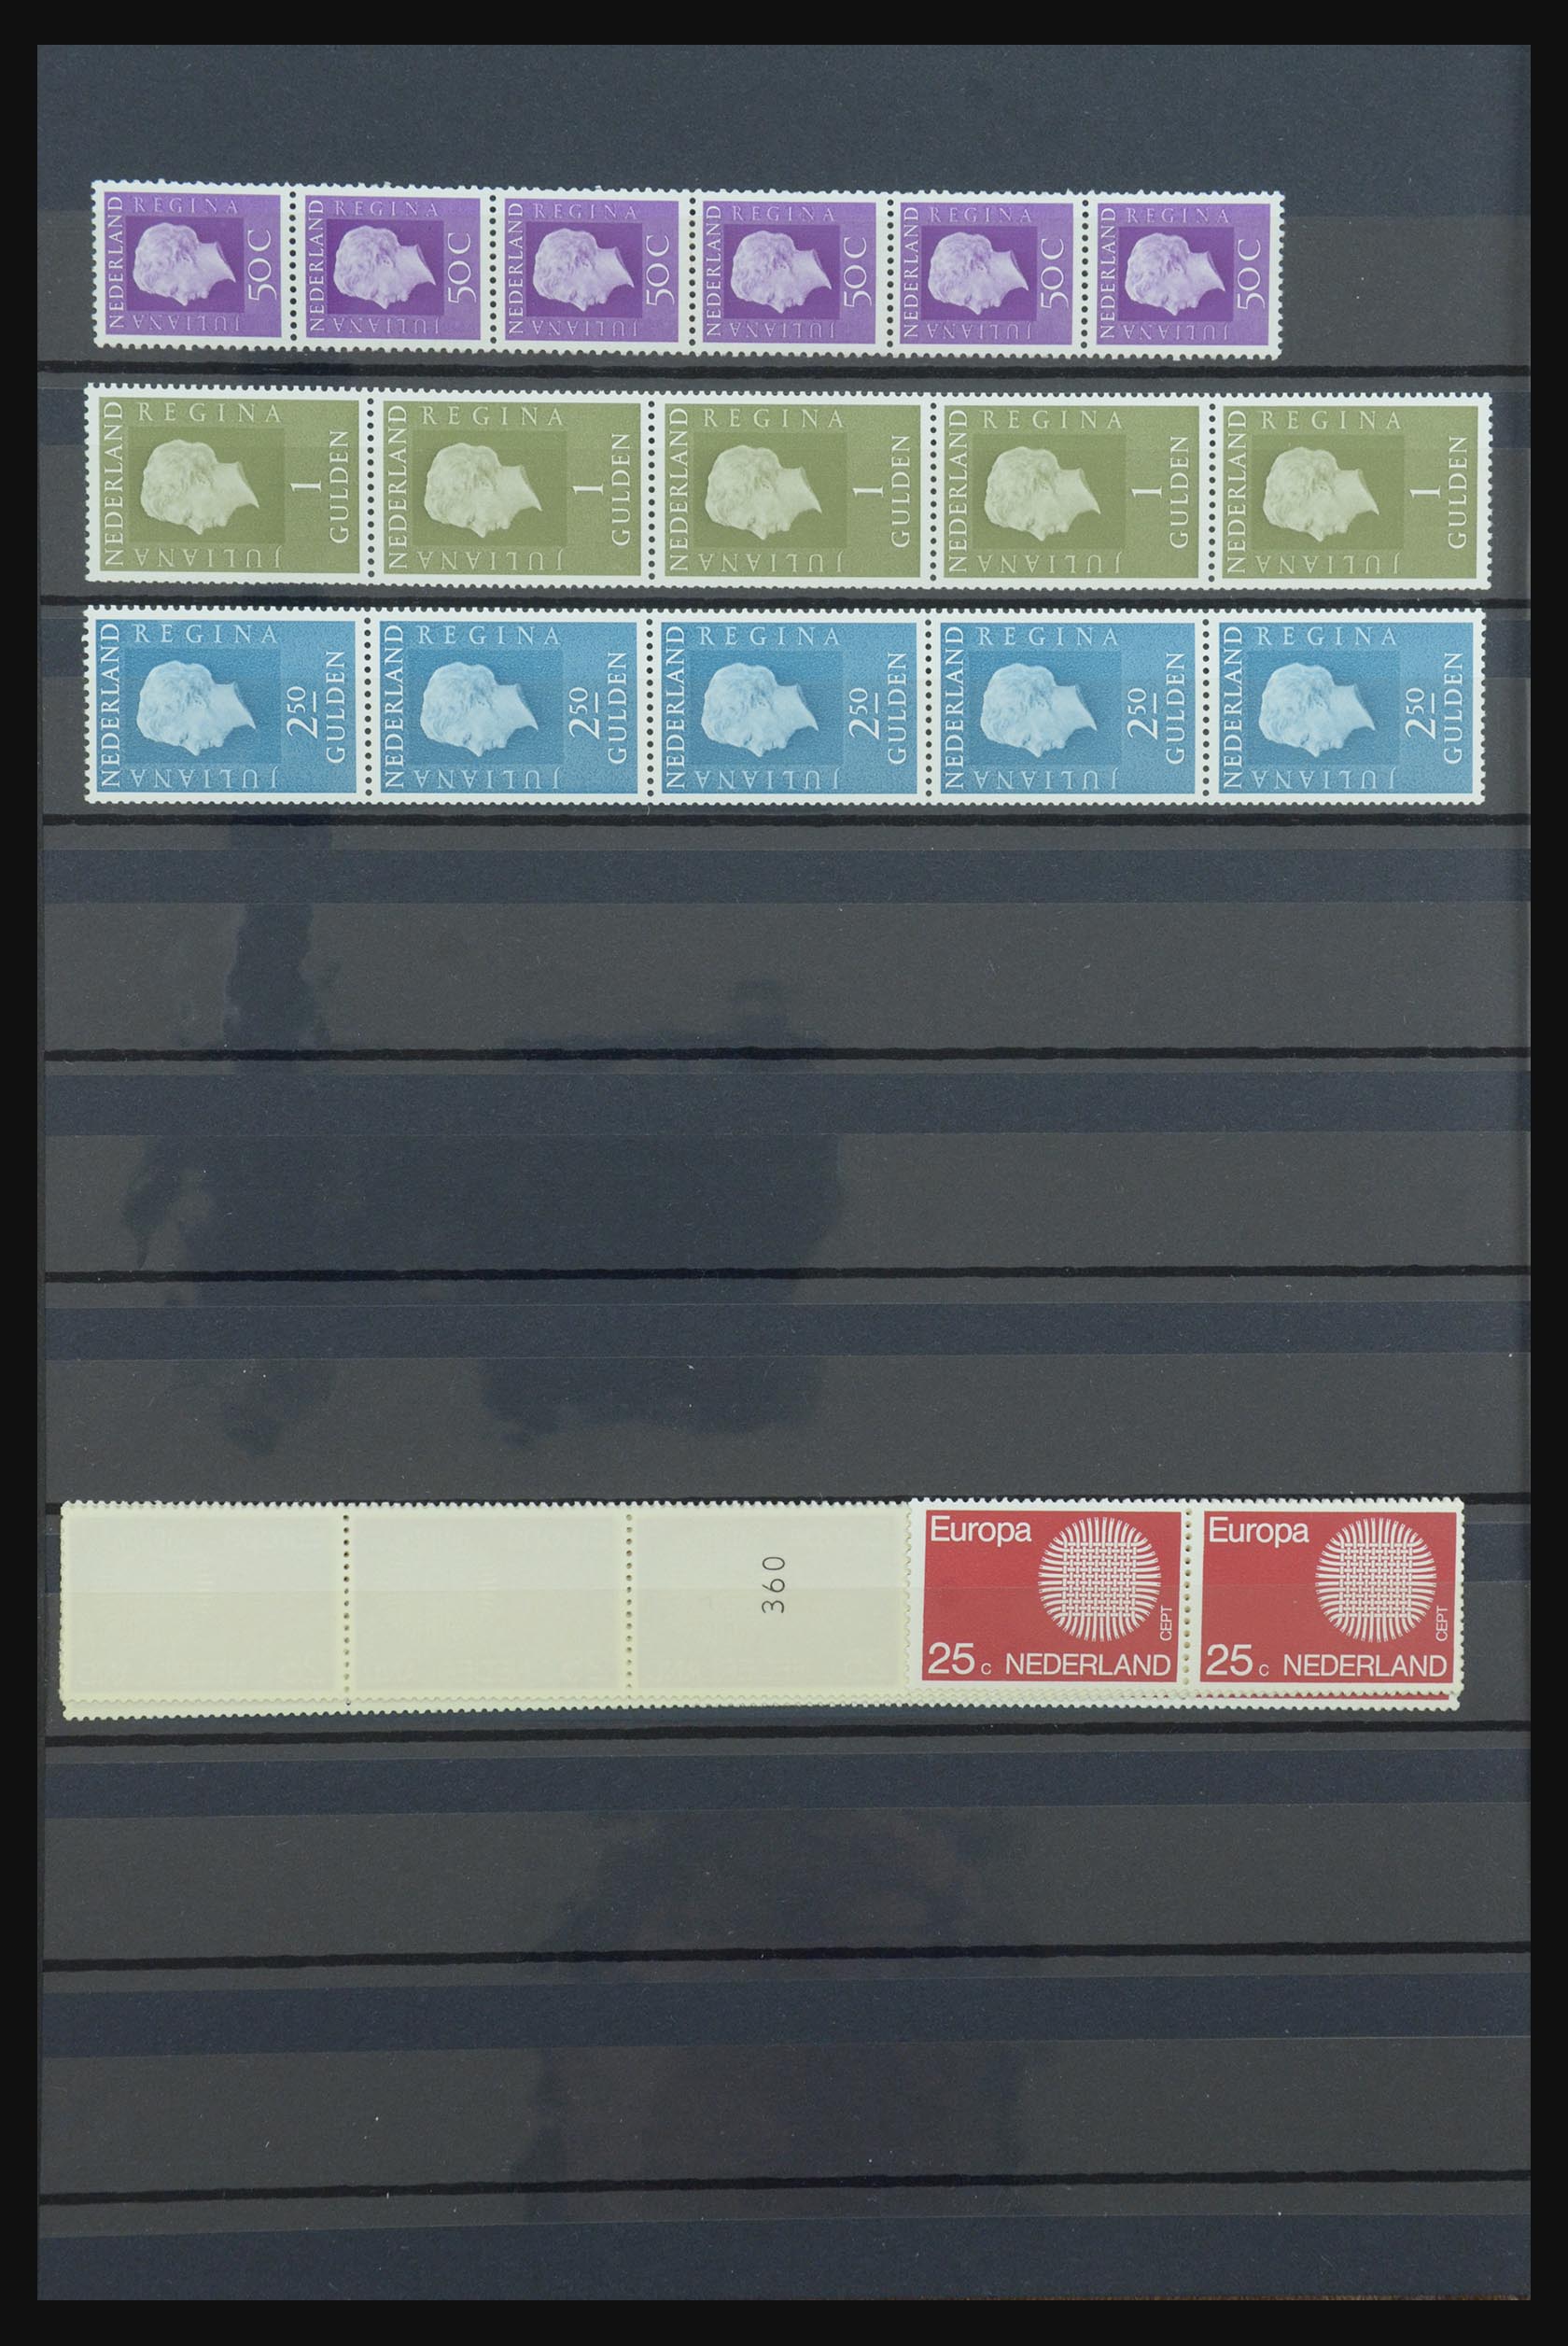 31625 002 - 31625 Nederland rolzegels 1965-2009.